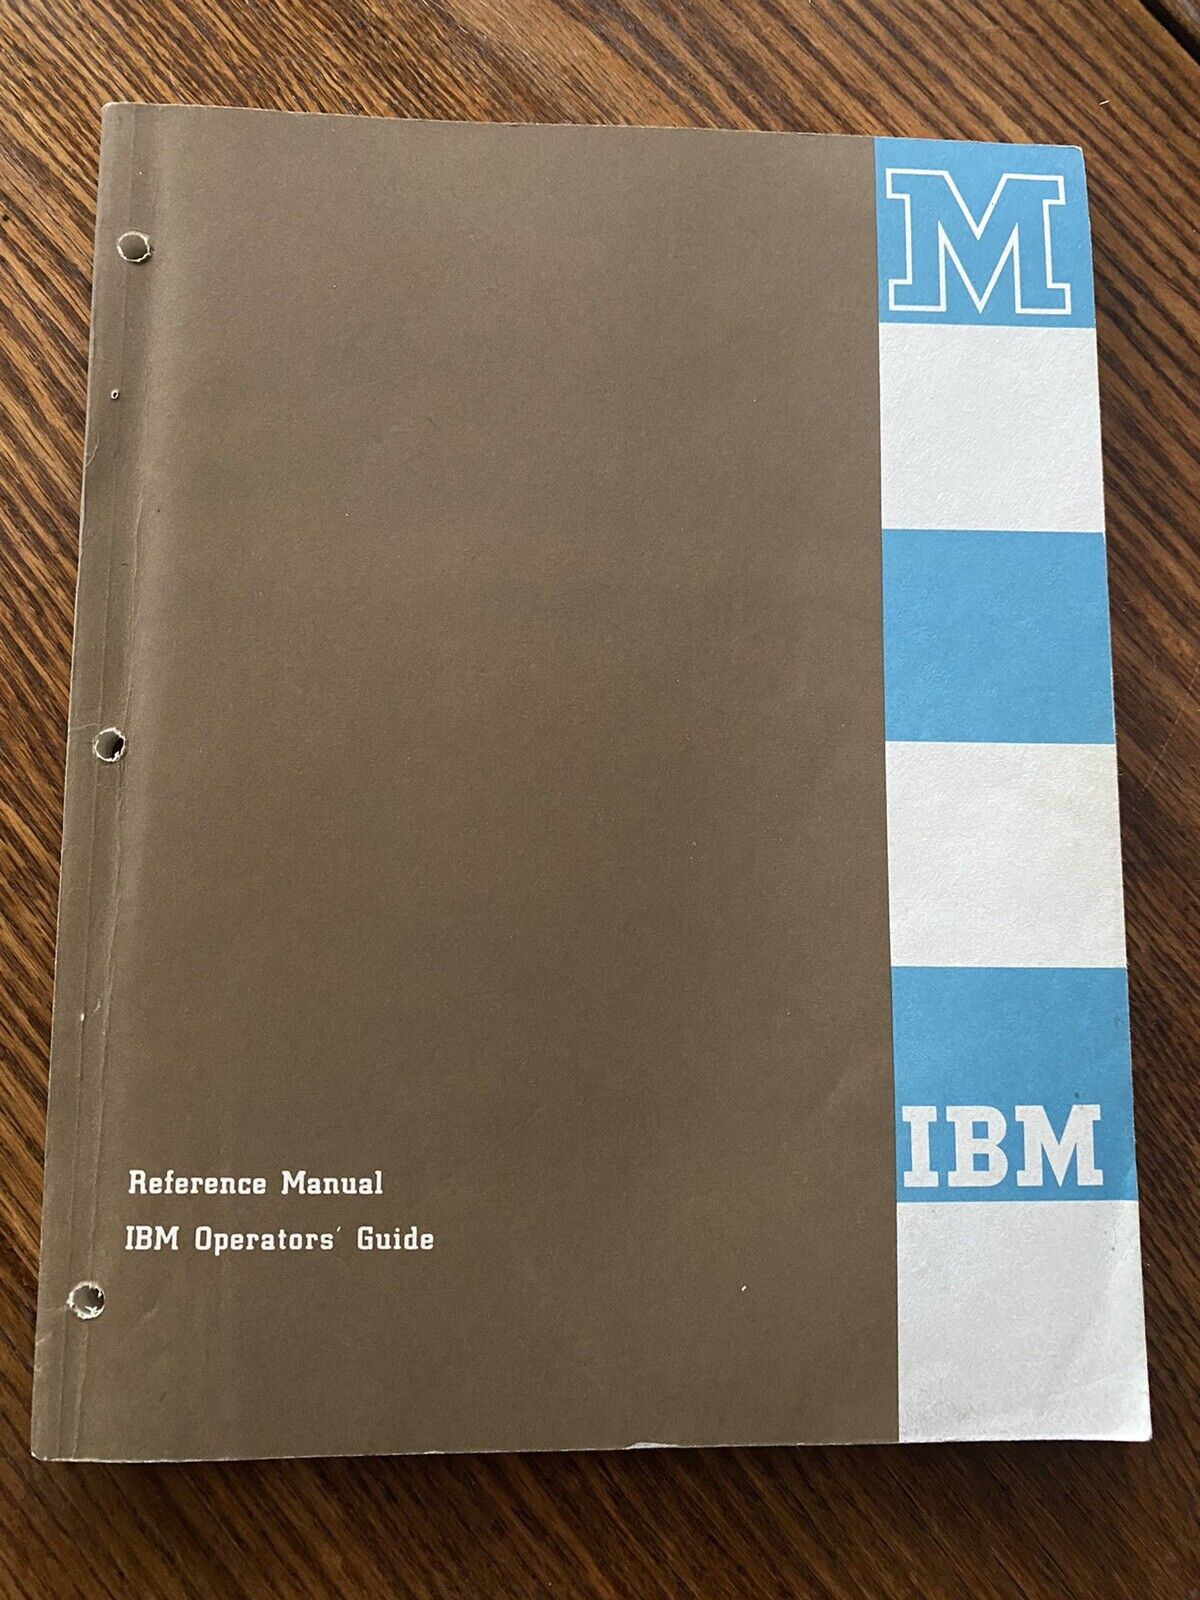 IBM Reference Manual; IBM Operators Guide July 1959